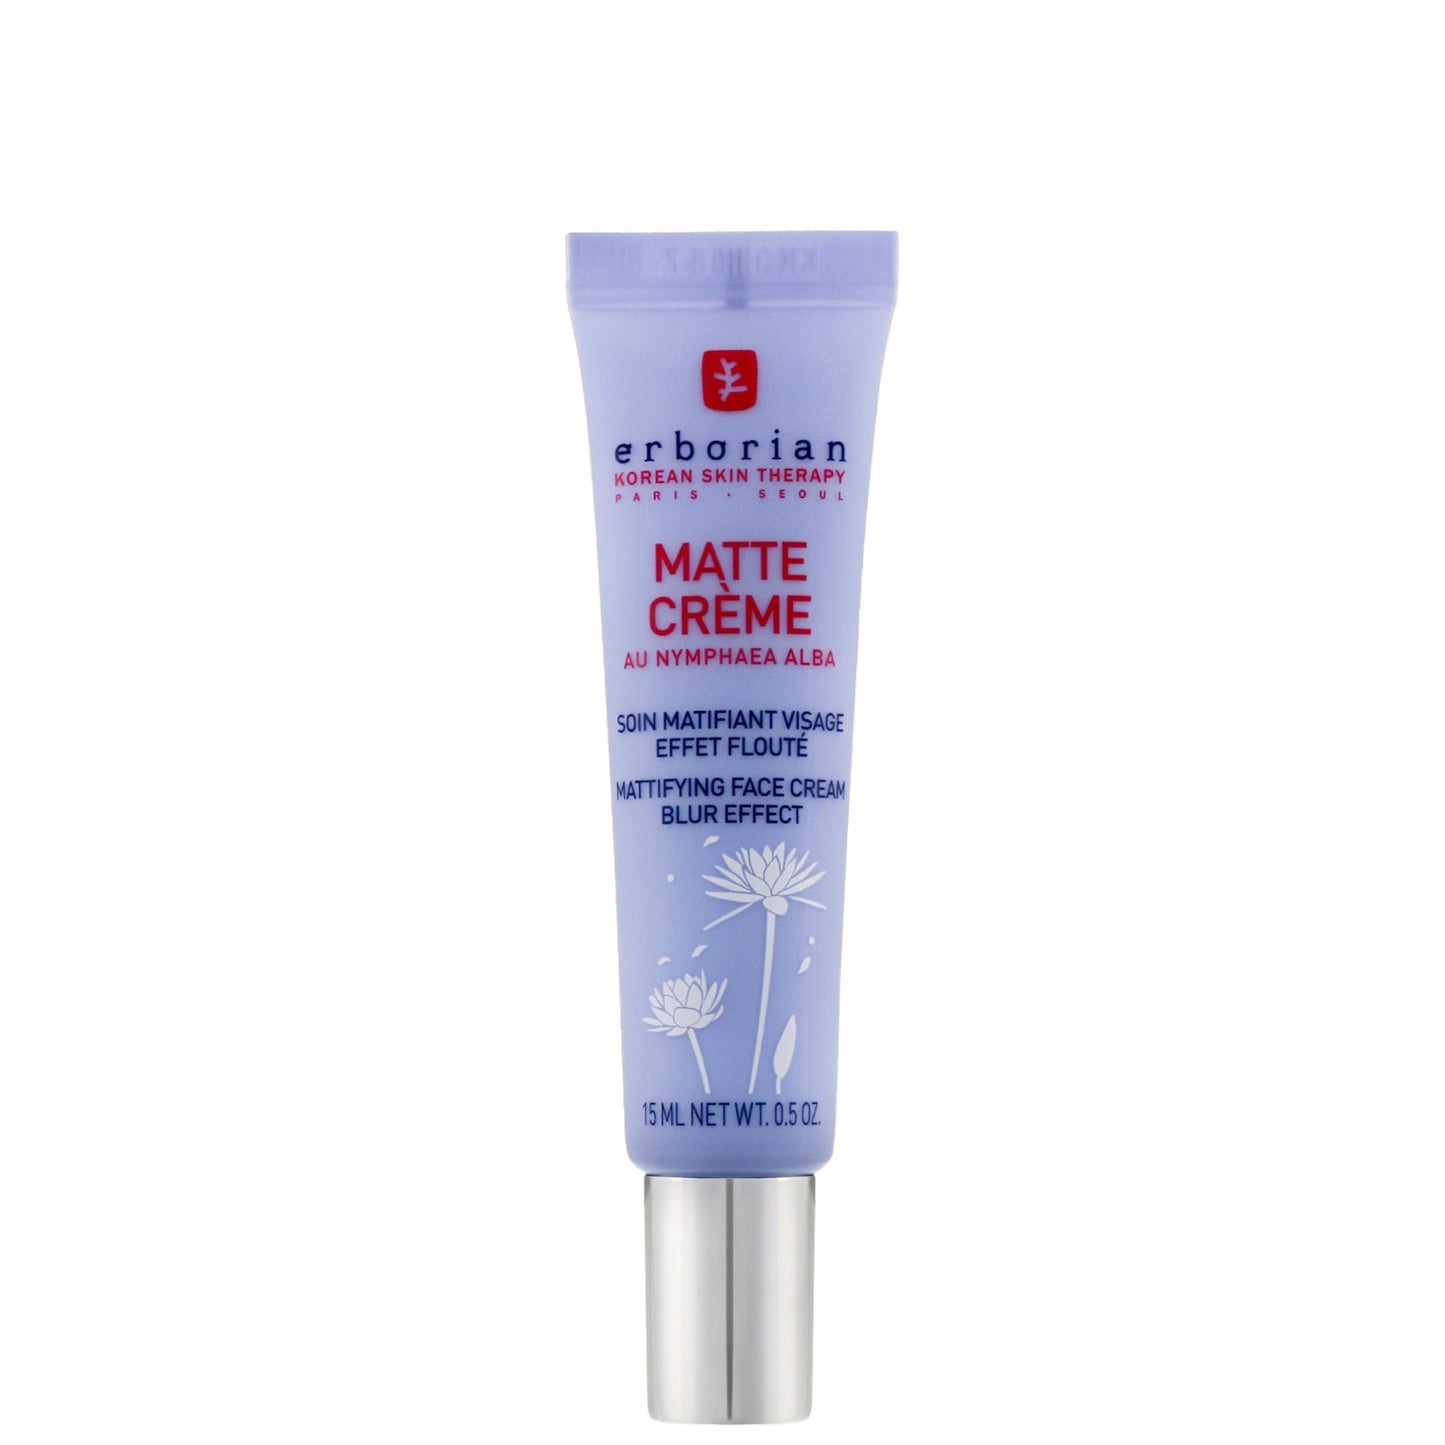 Erborian Matte Crème Mattifying Face Cream Blur Effect